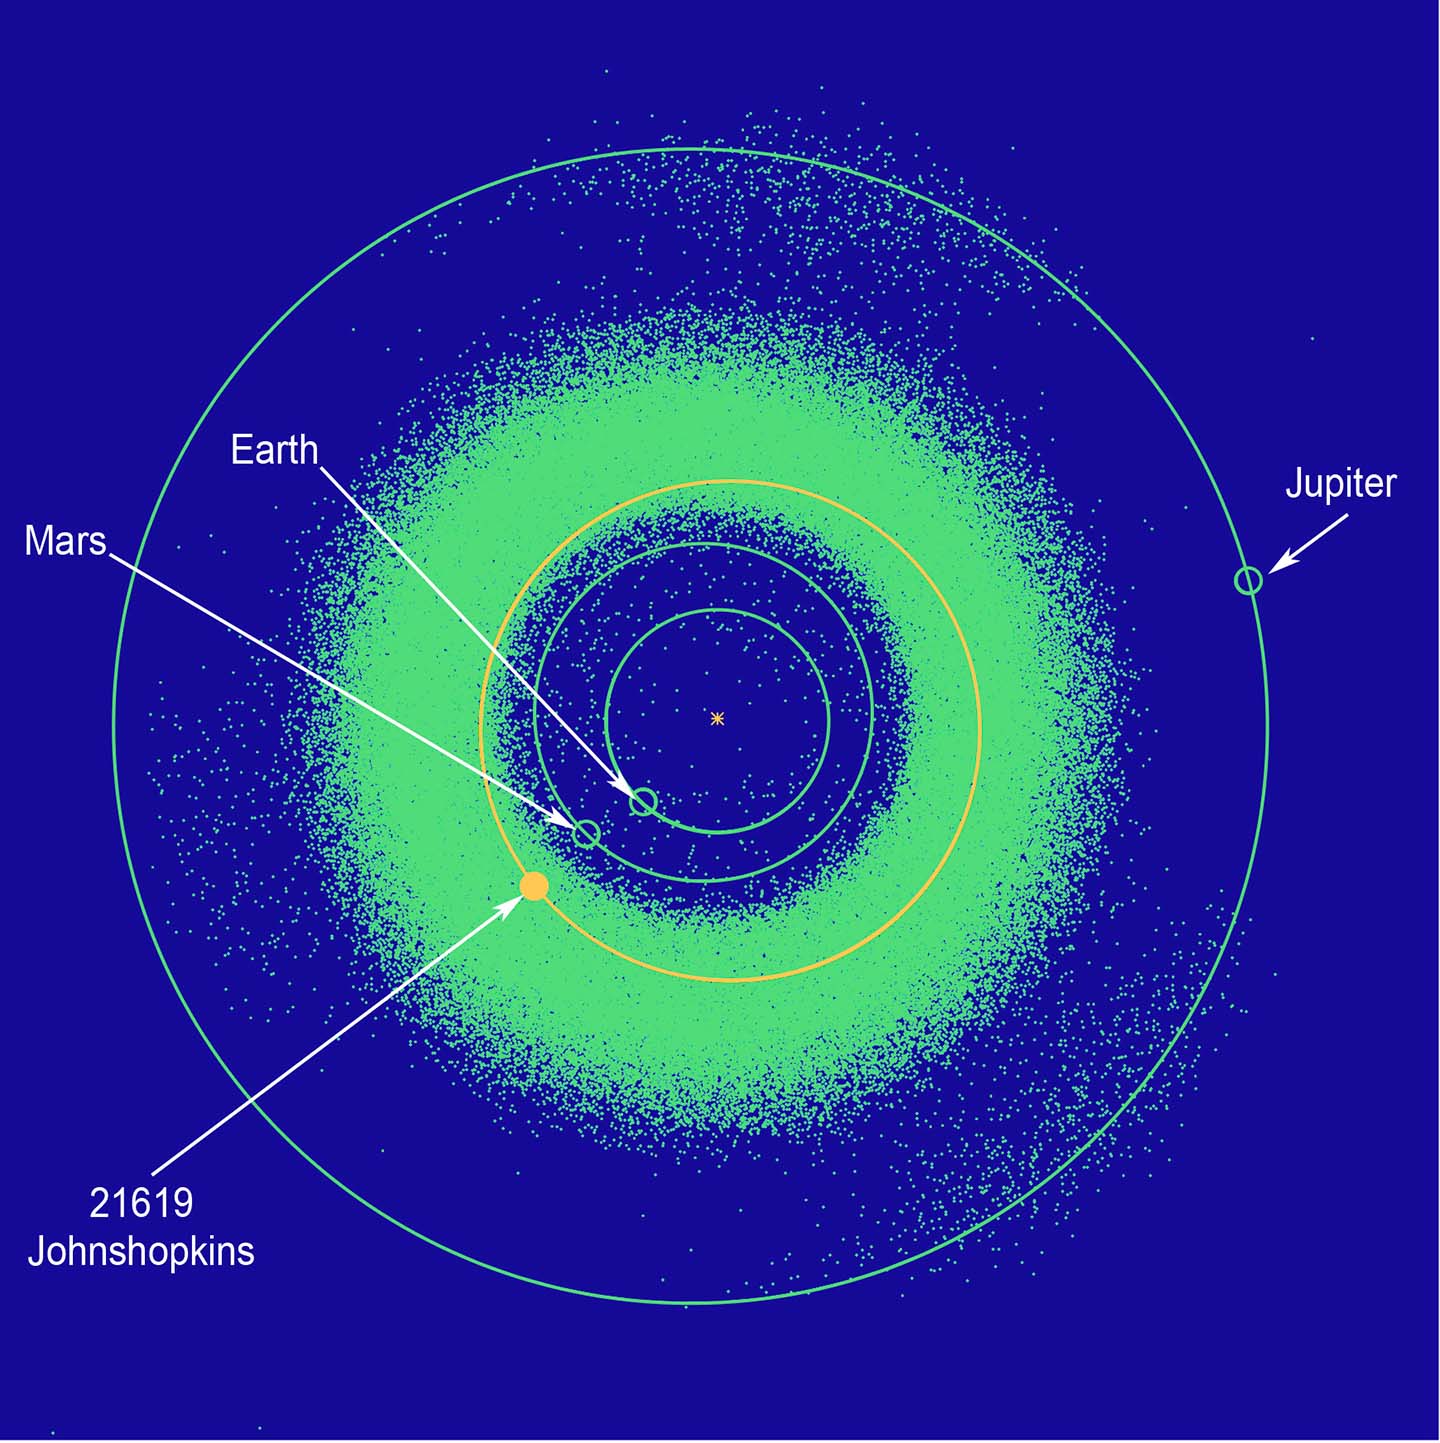 Orbit of asteroid 21619 Johnshopkins, on a plot of the inner solar system